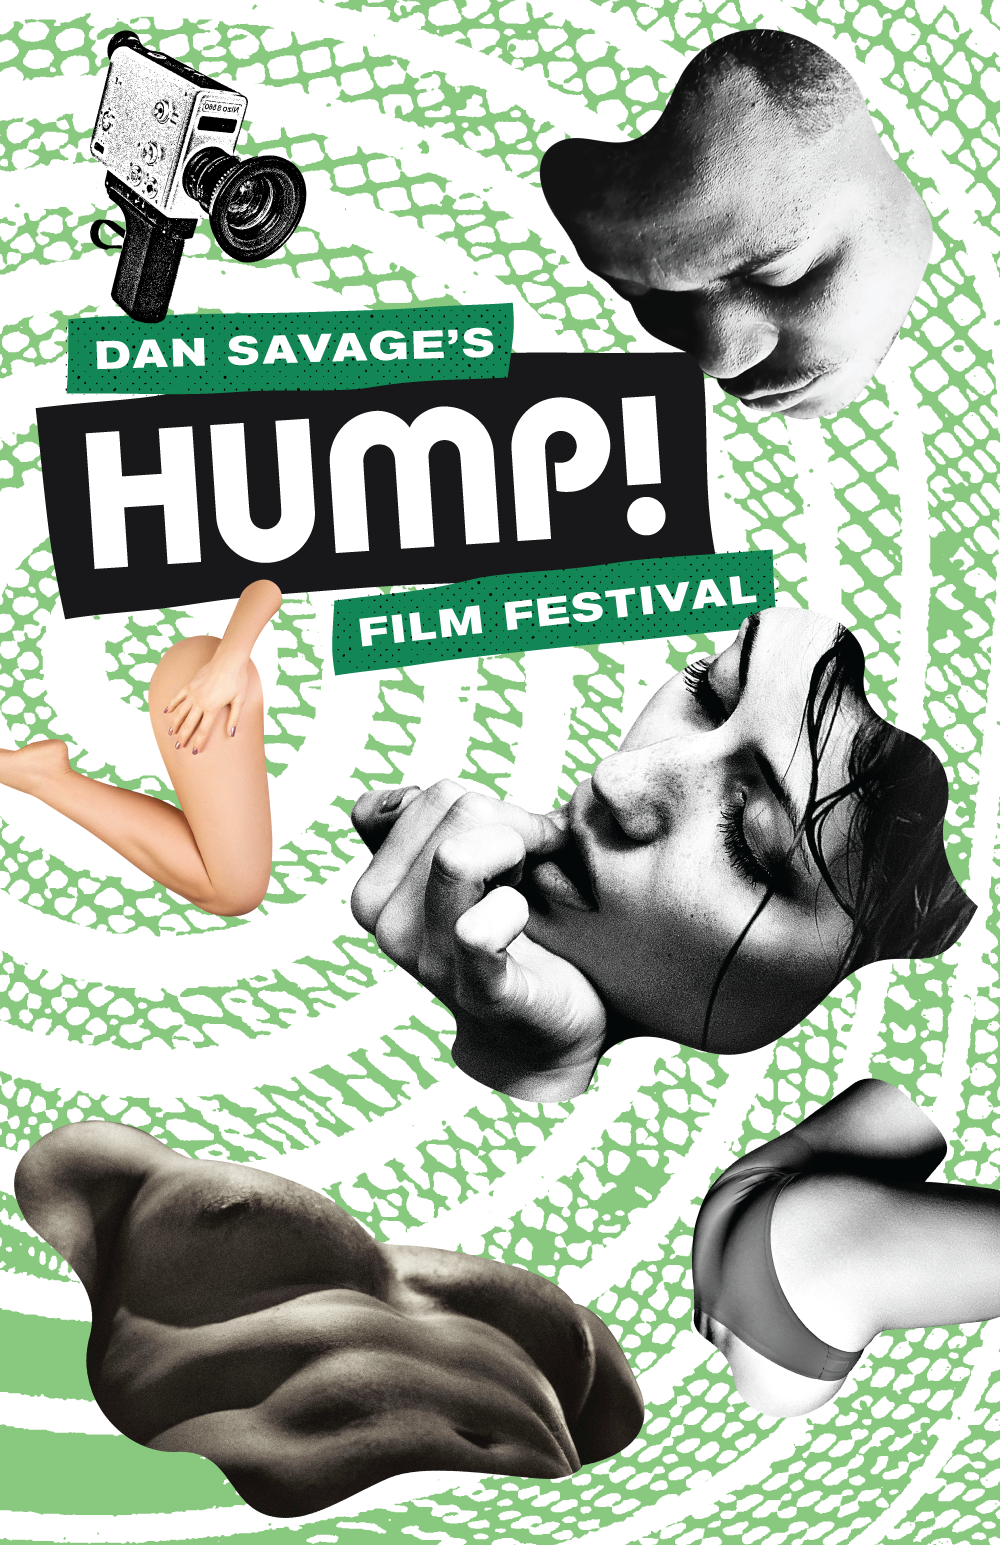 bassant adel recommends Hump Film Festival Videos